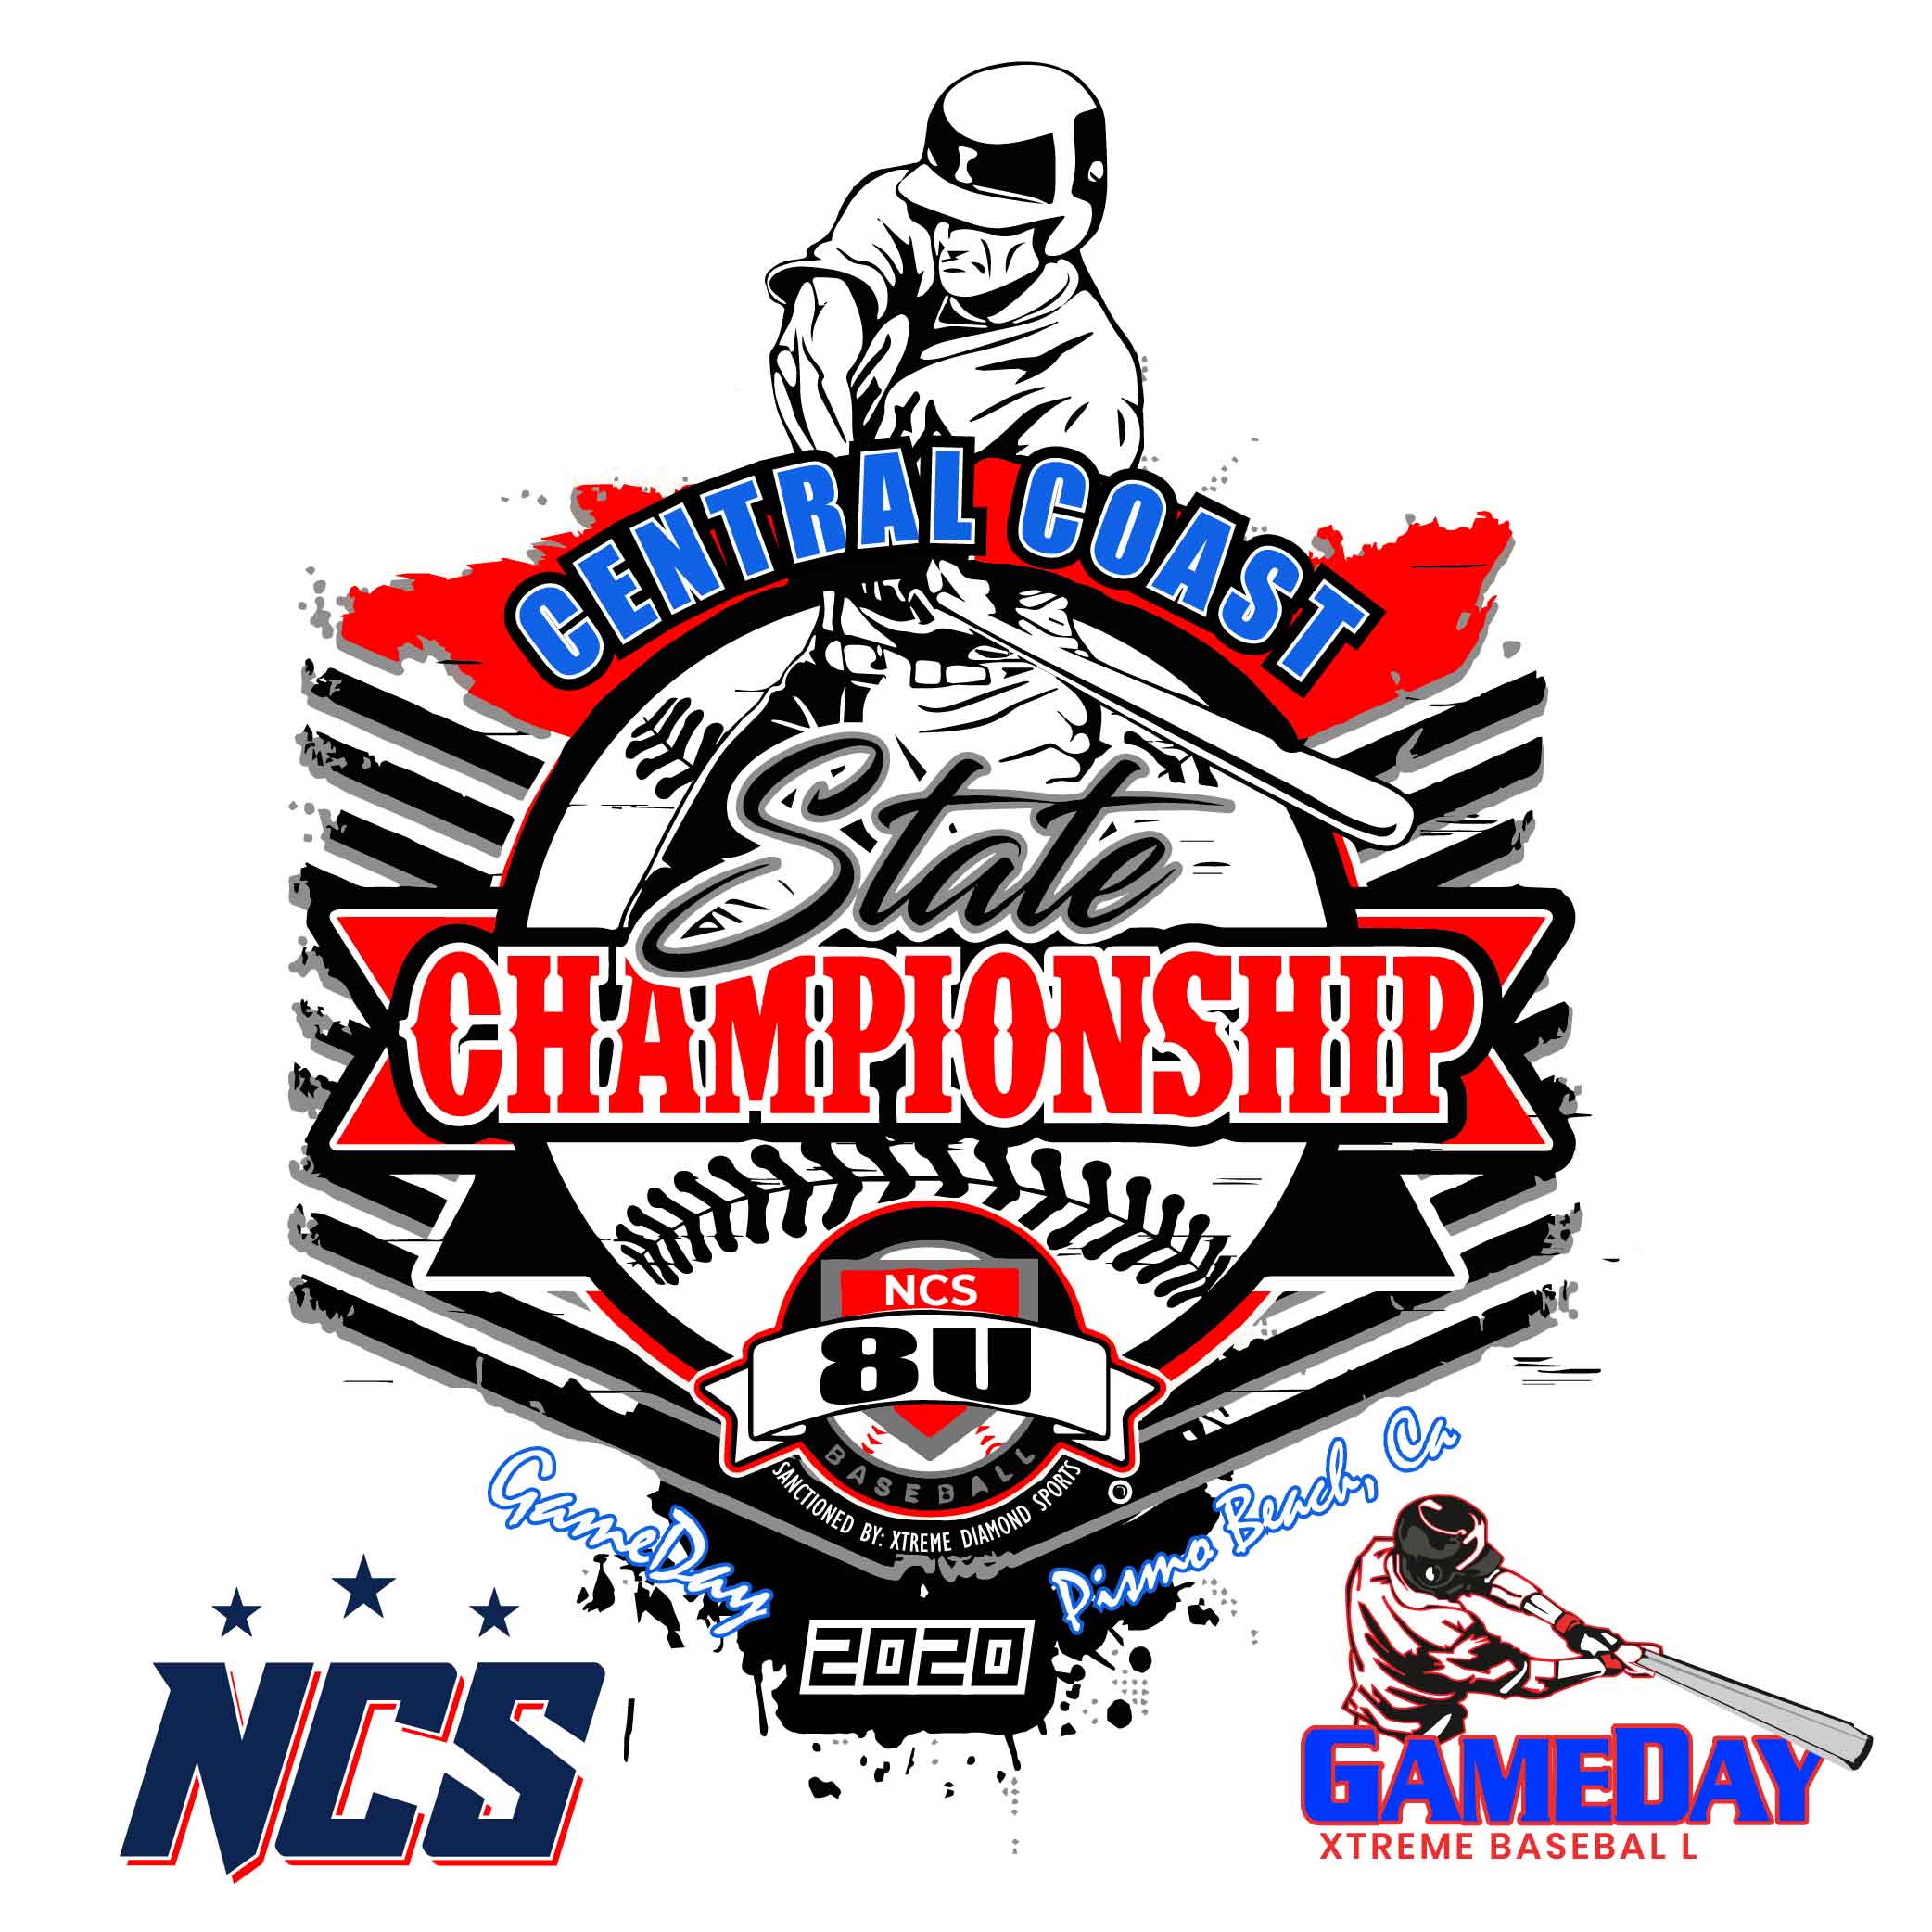 National Championship Sports Baseball Events